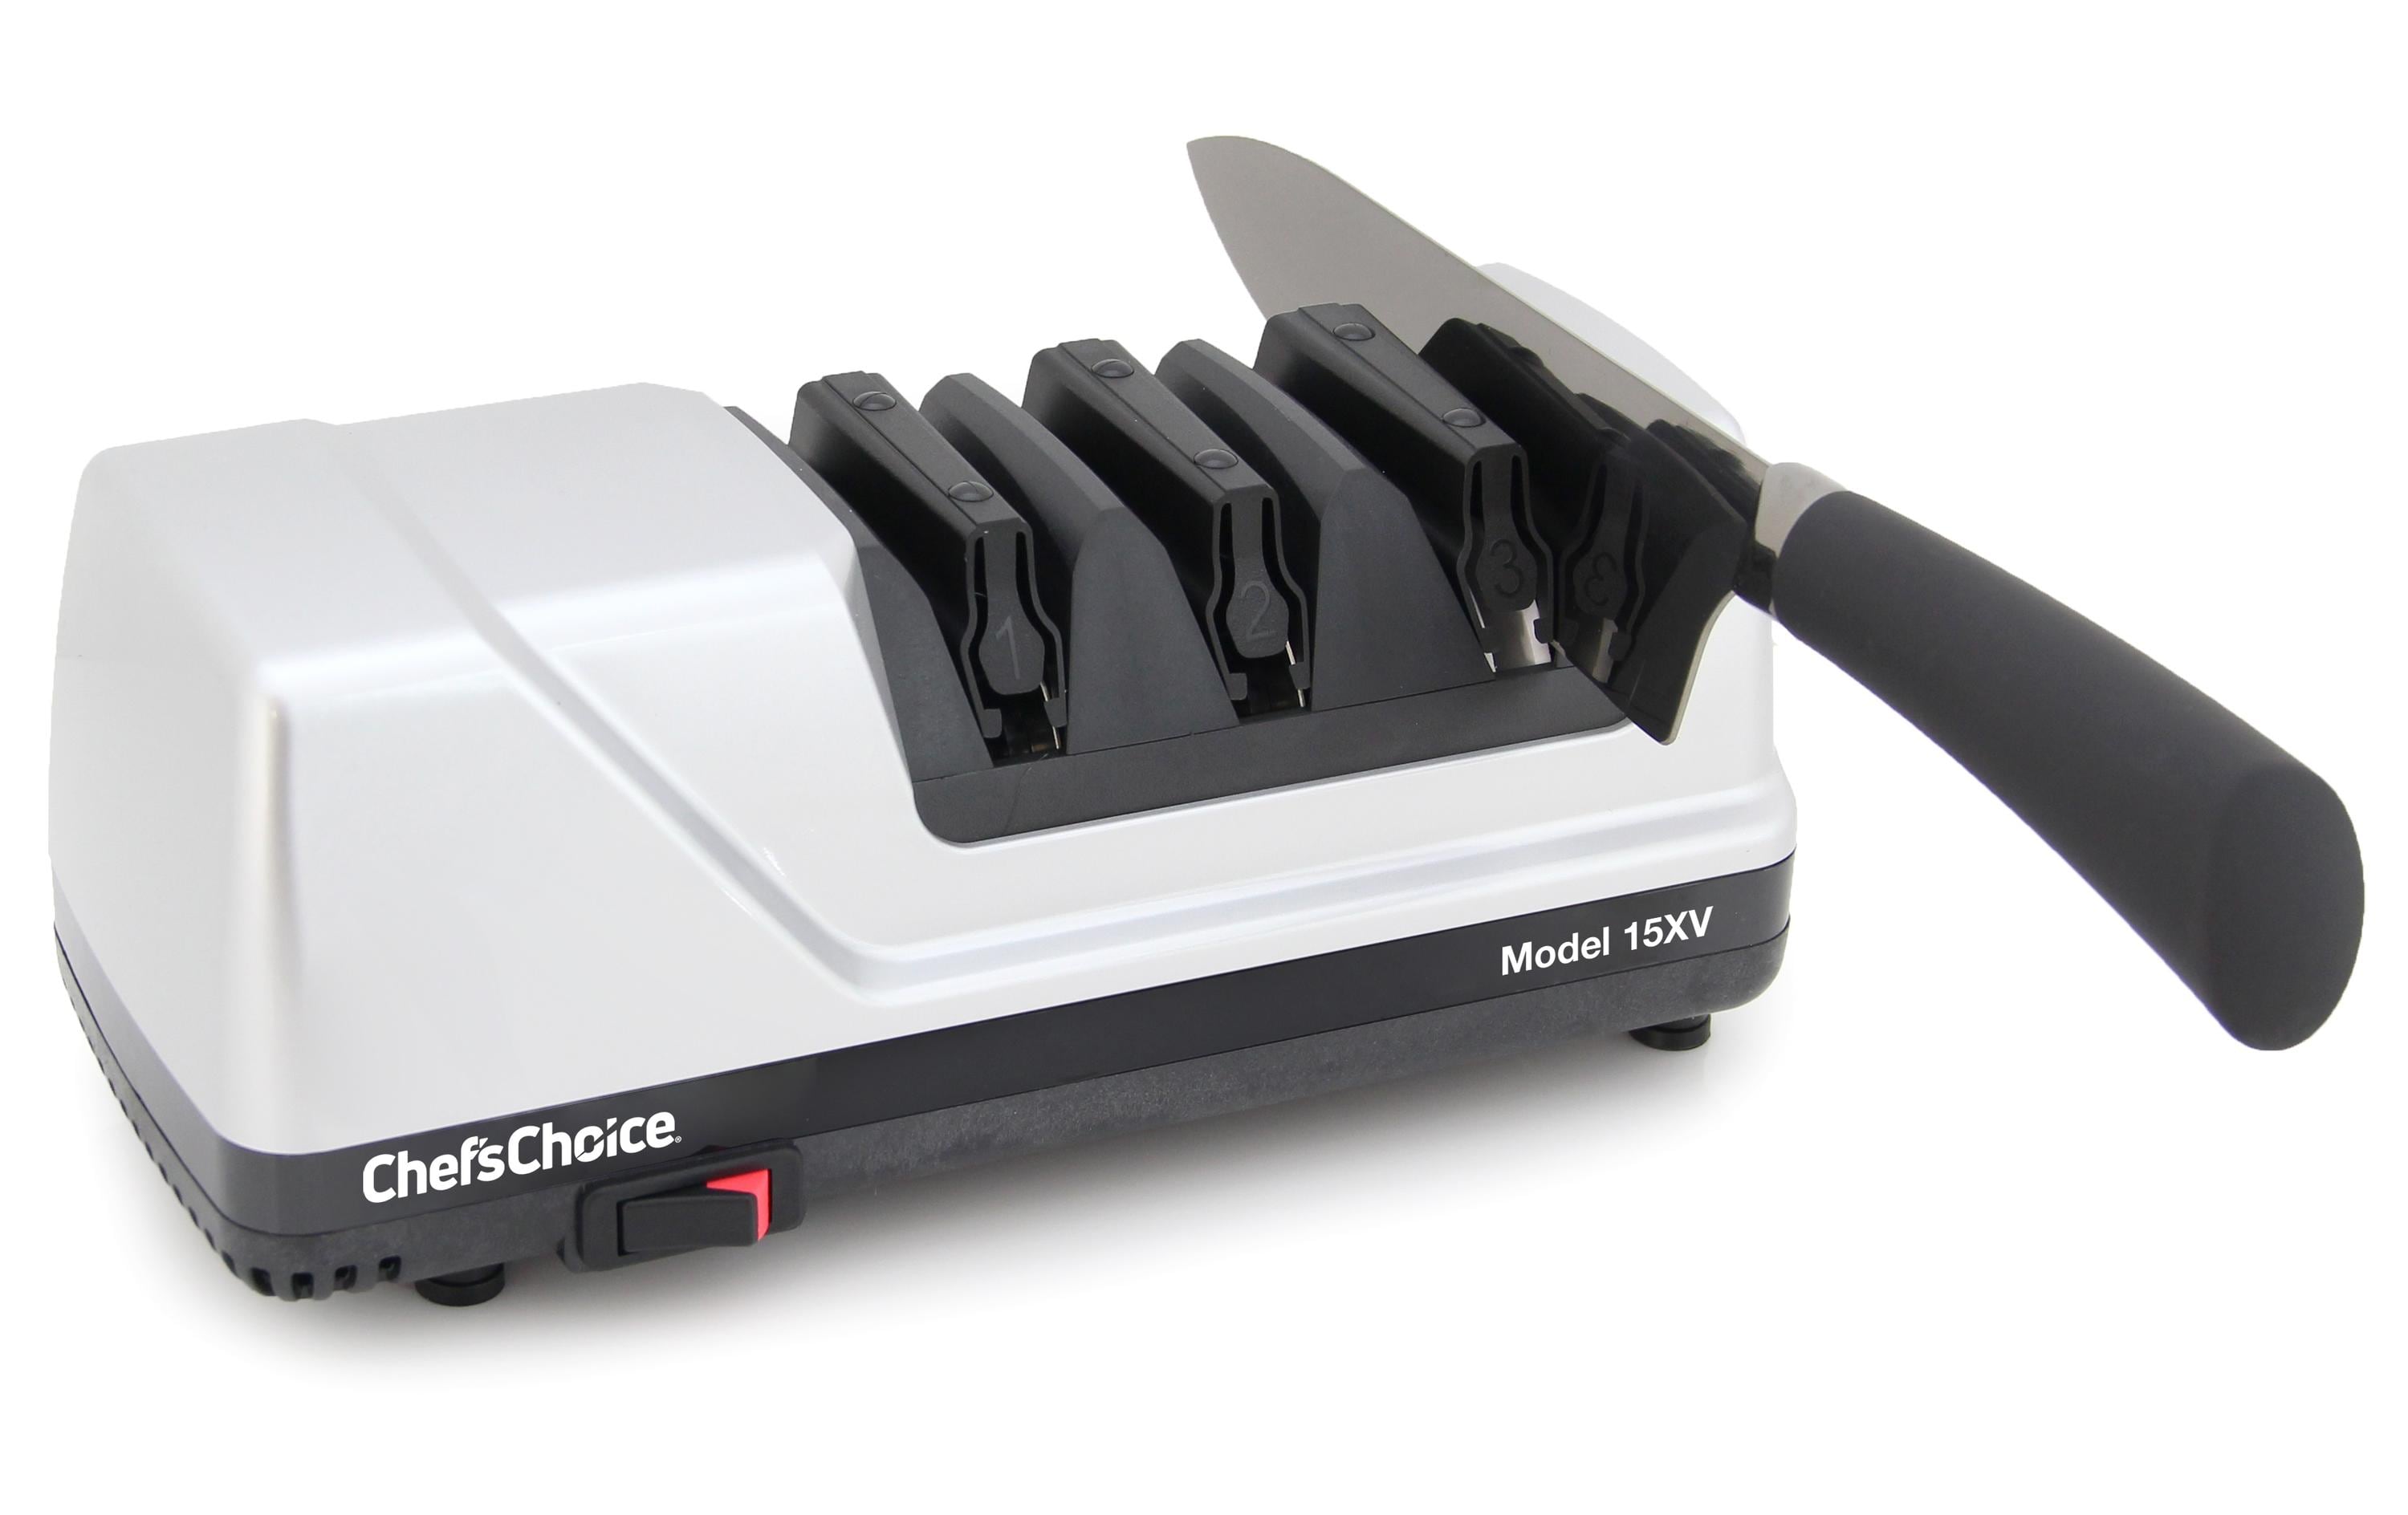 Chefs Choice Knife grinder 15 XV